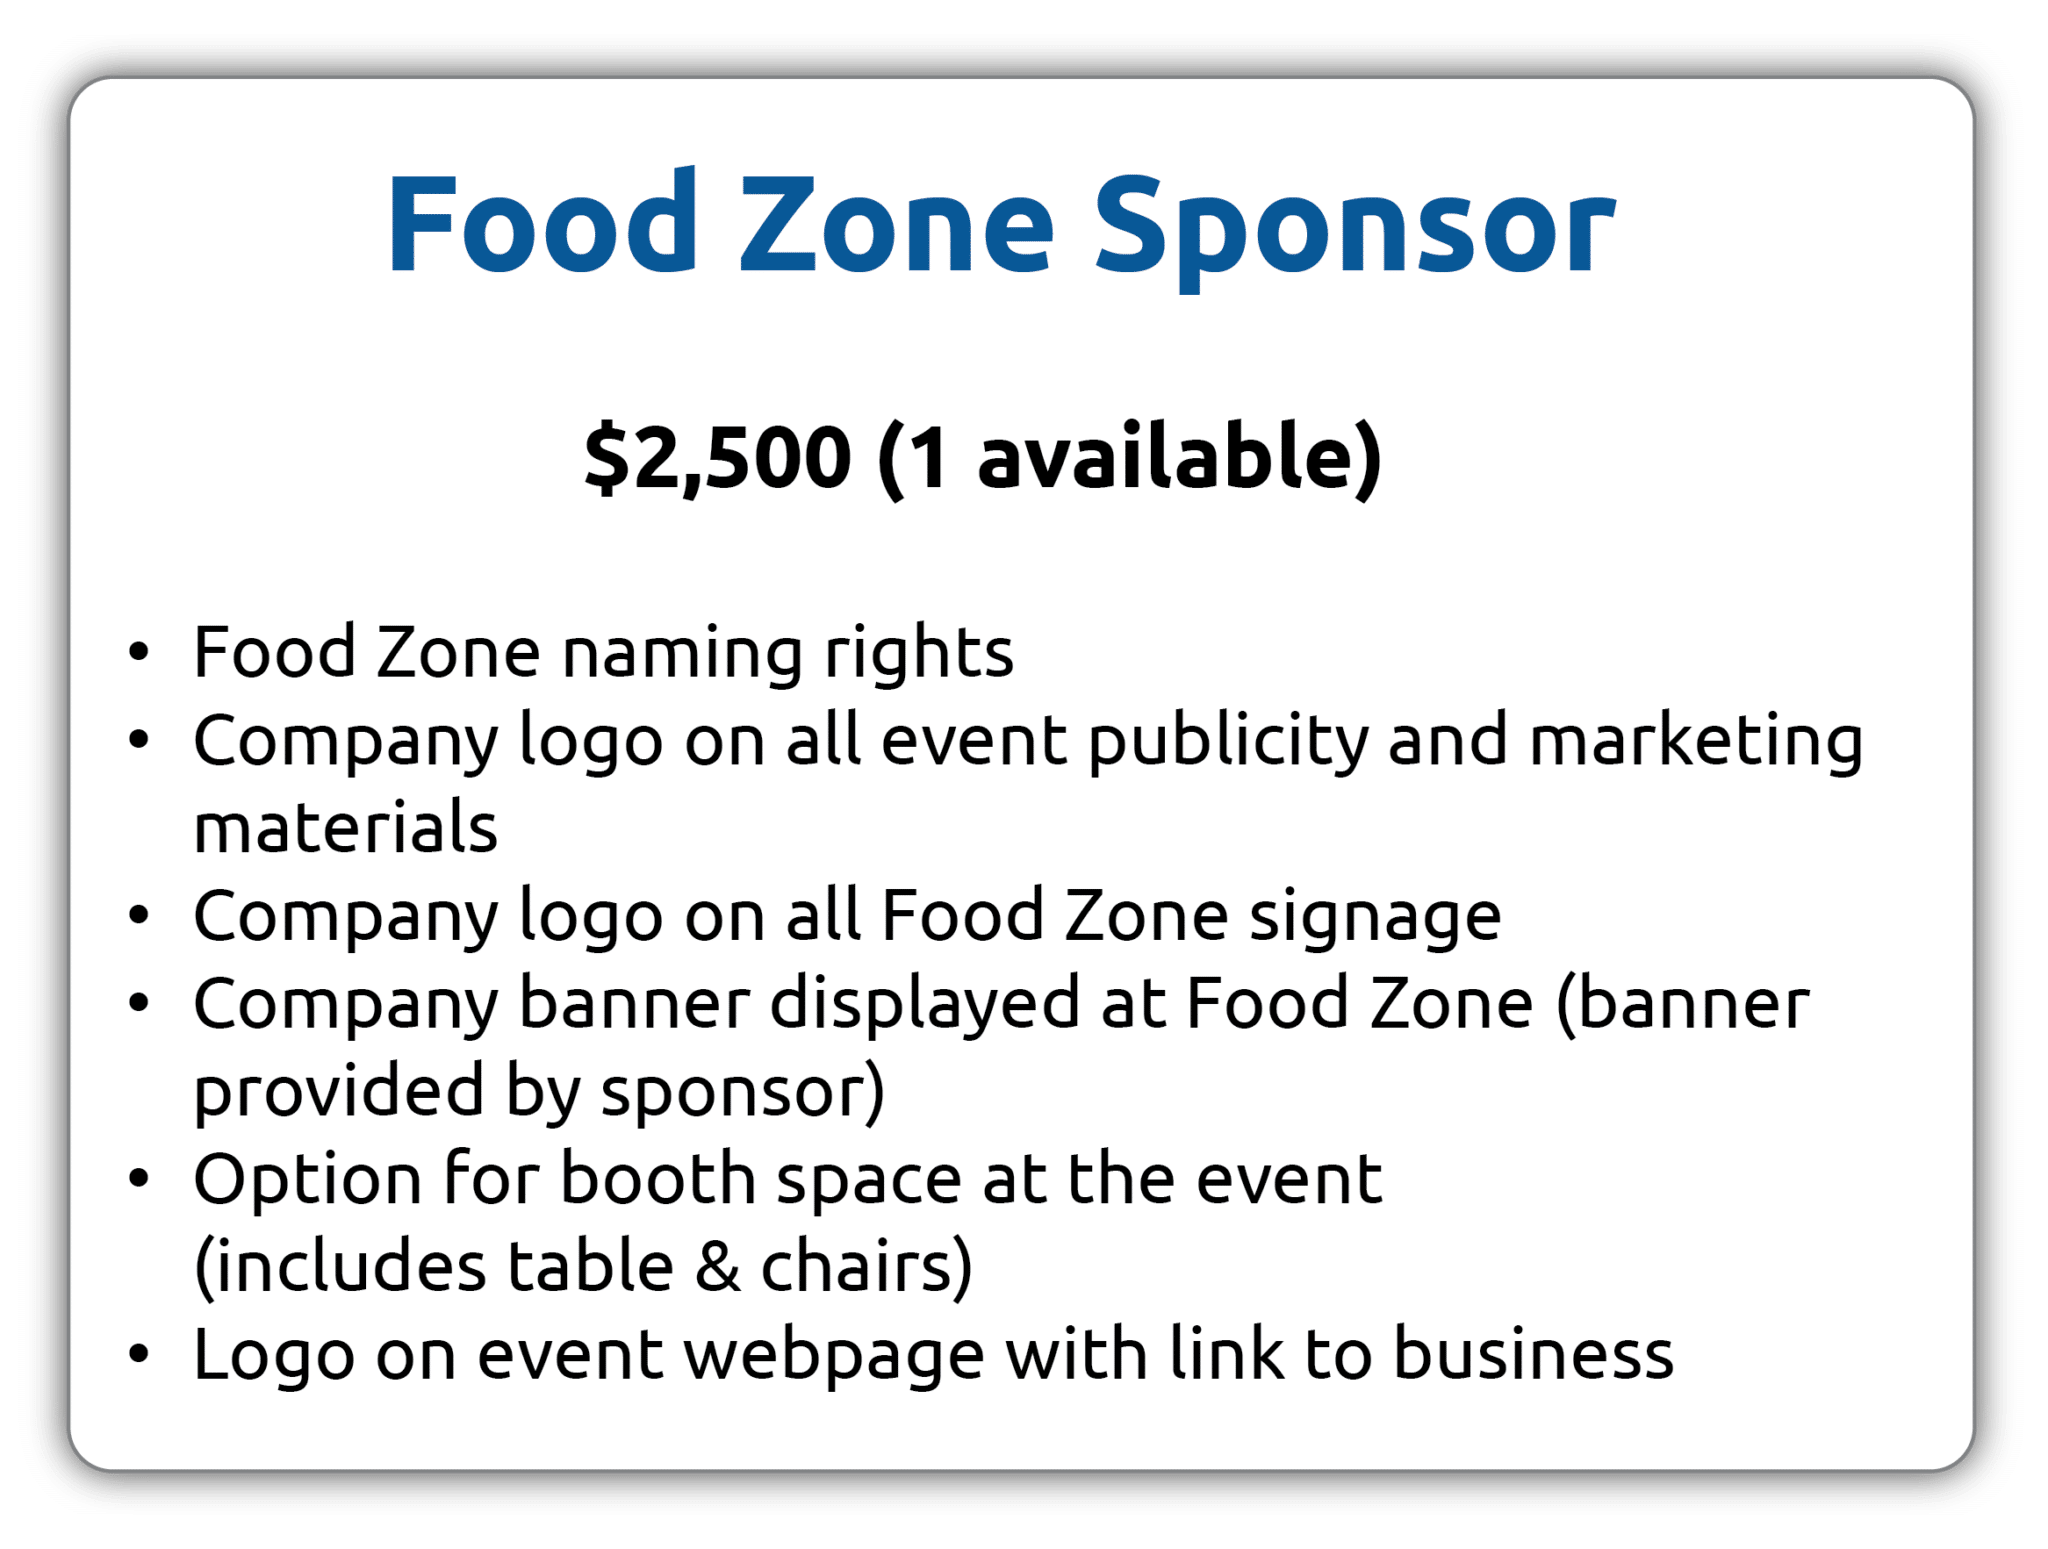 FoodZoneSponsor